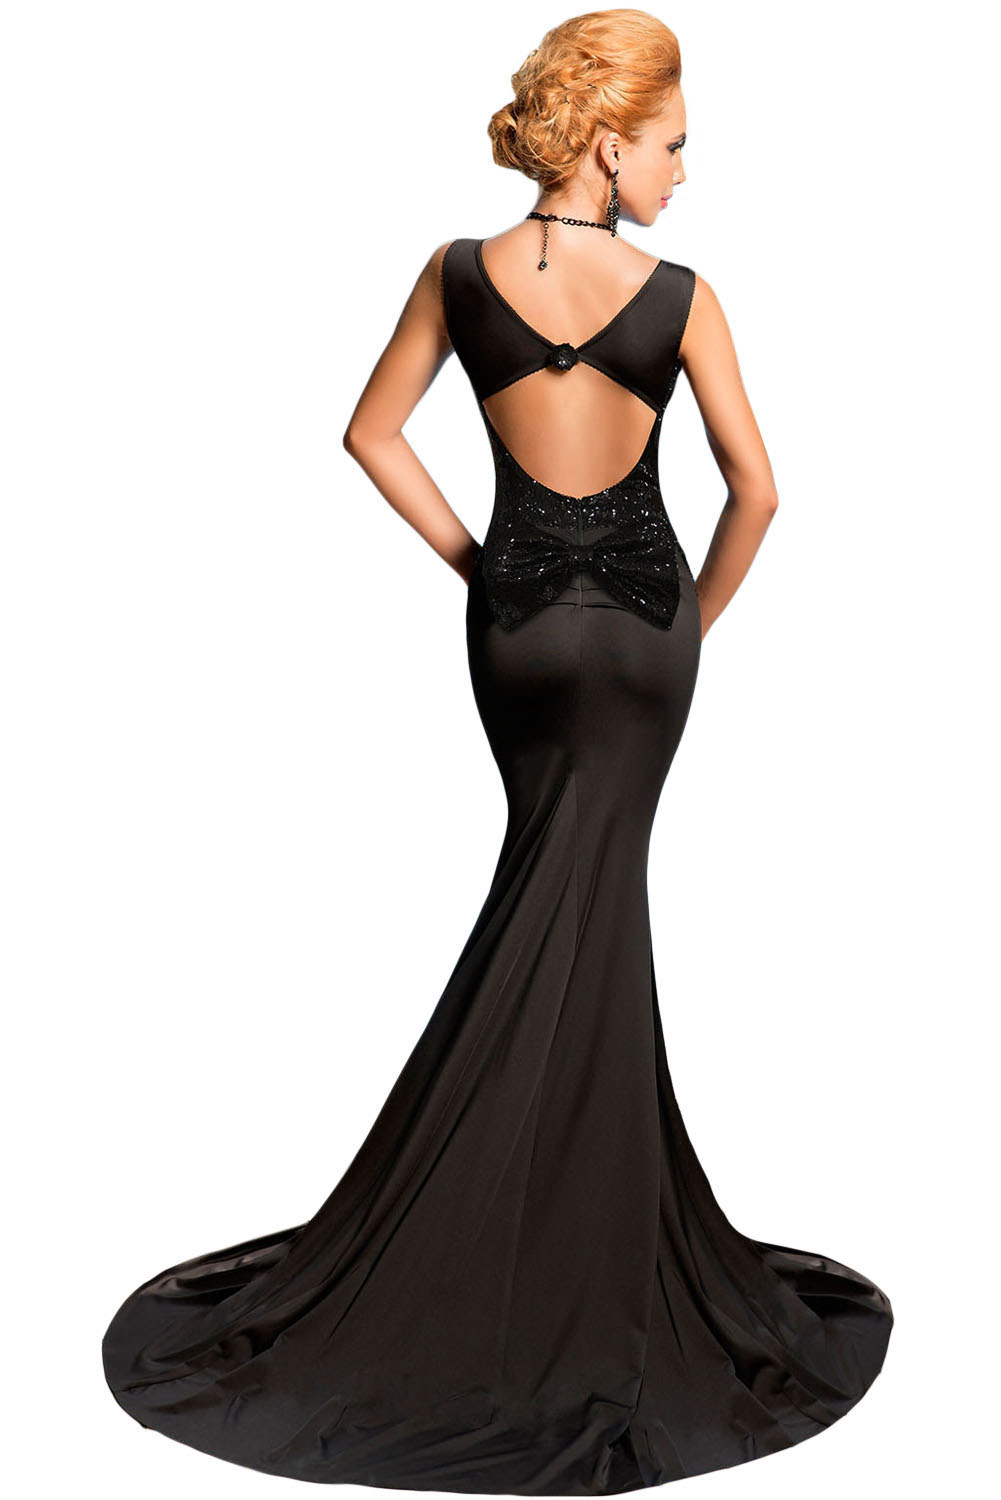 Black Backless Mermaid Prom Dress & Always In Style 2017-2018